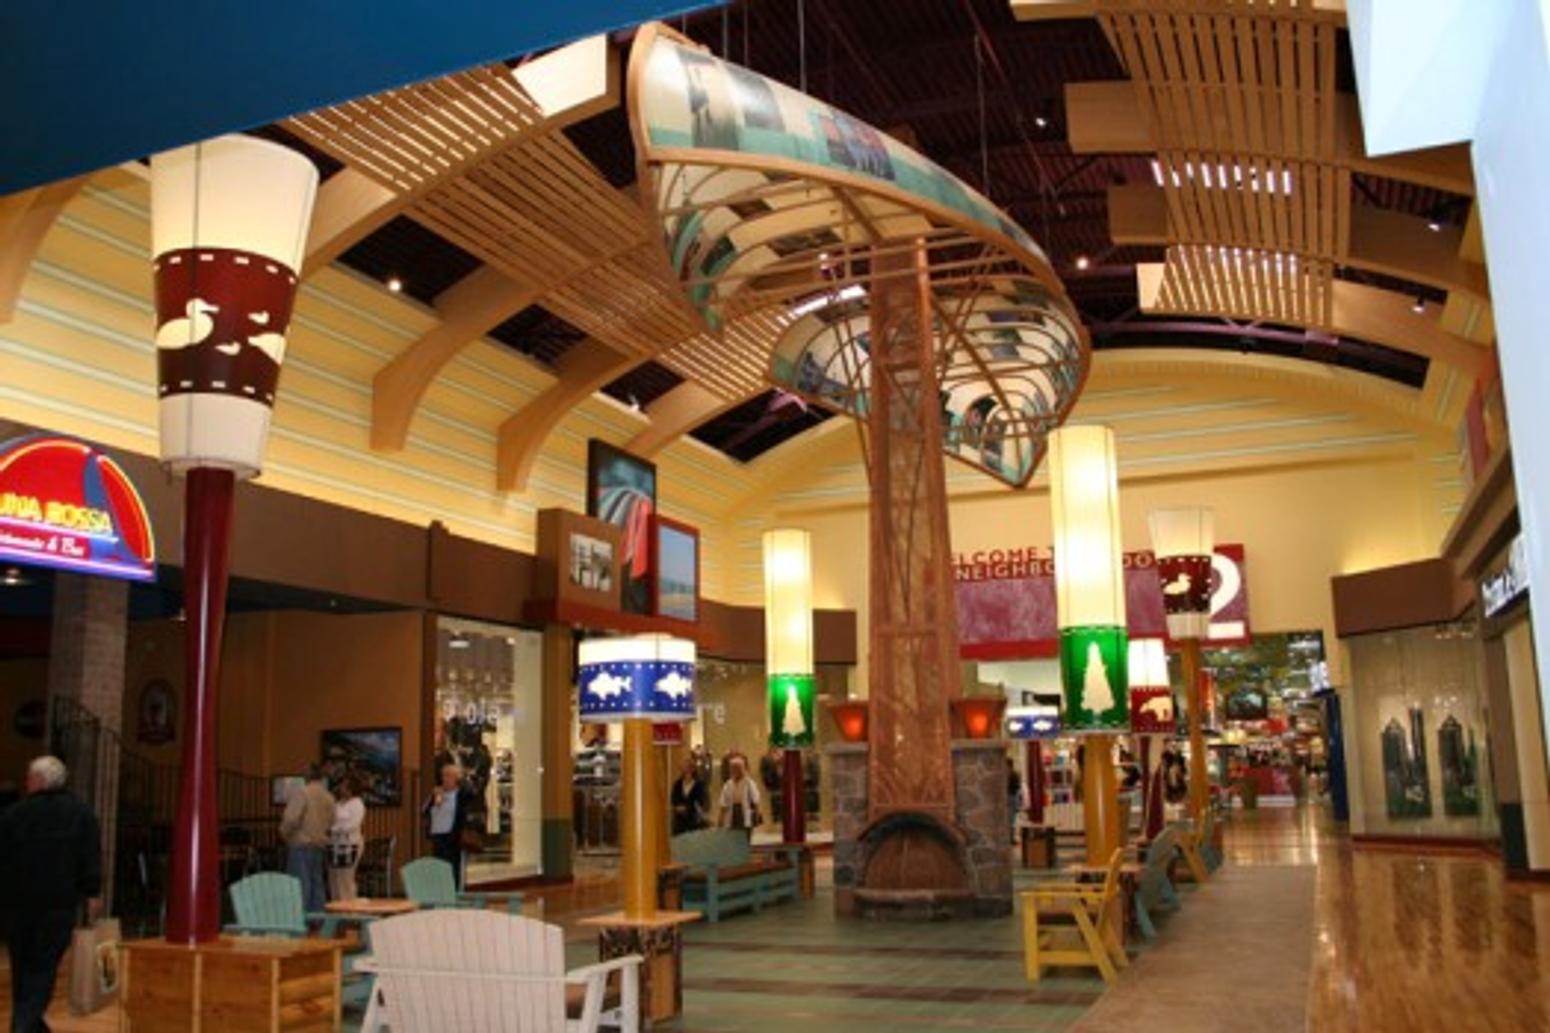 Mall inside image